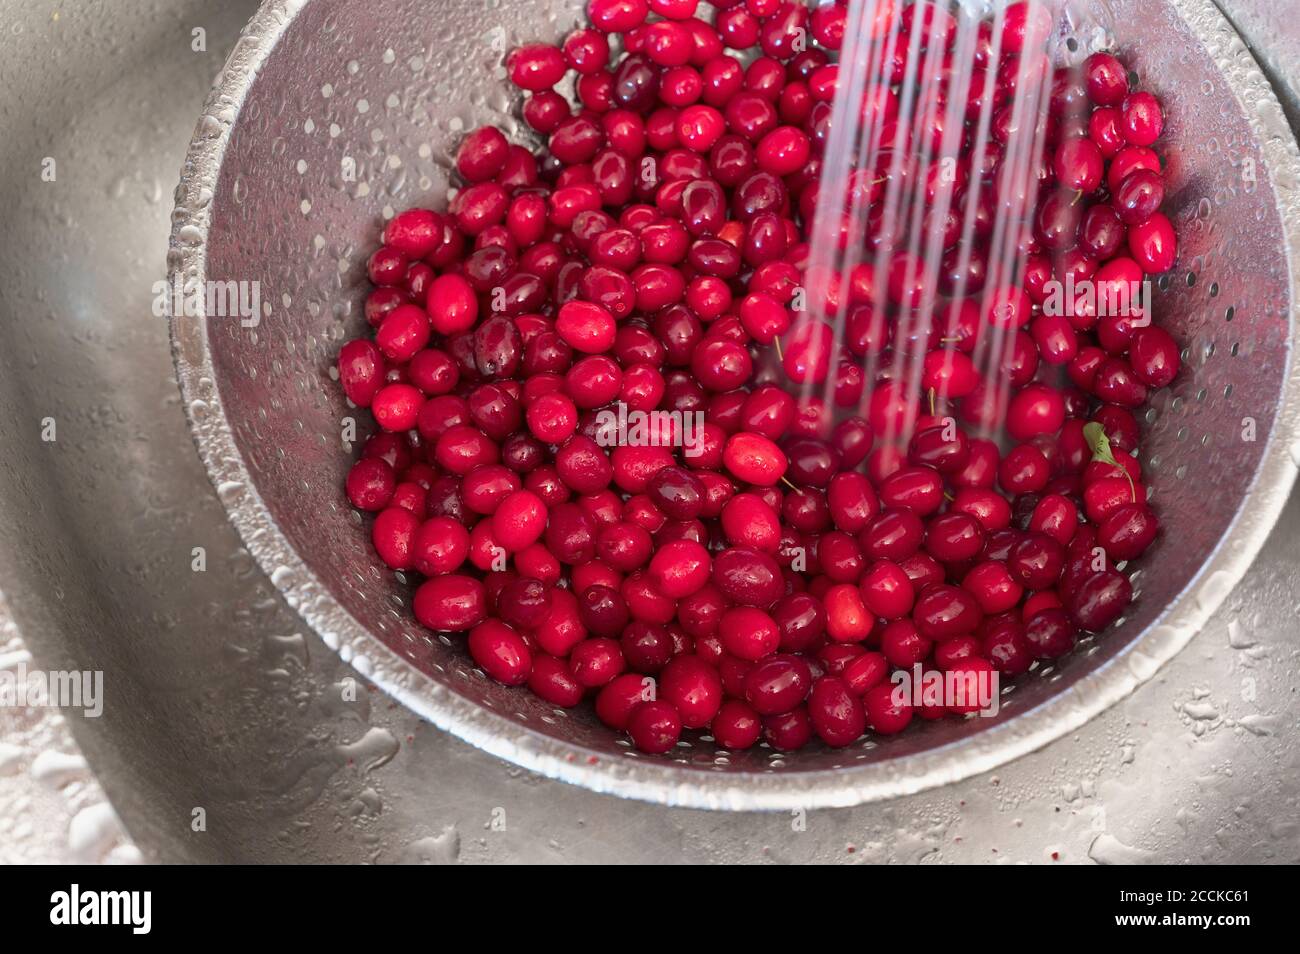 Cornelian cherries (Cornus mas) being washed in metal bowl Stock Photo